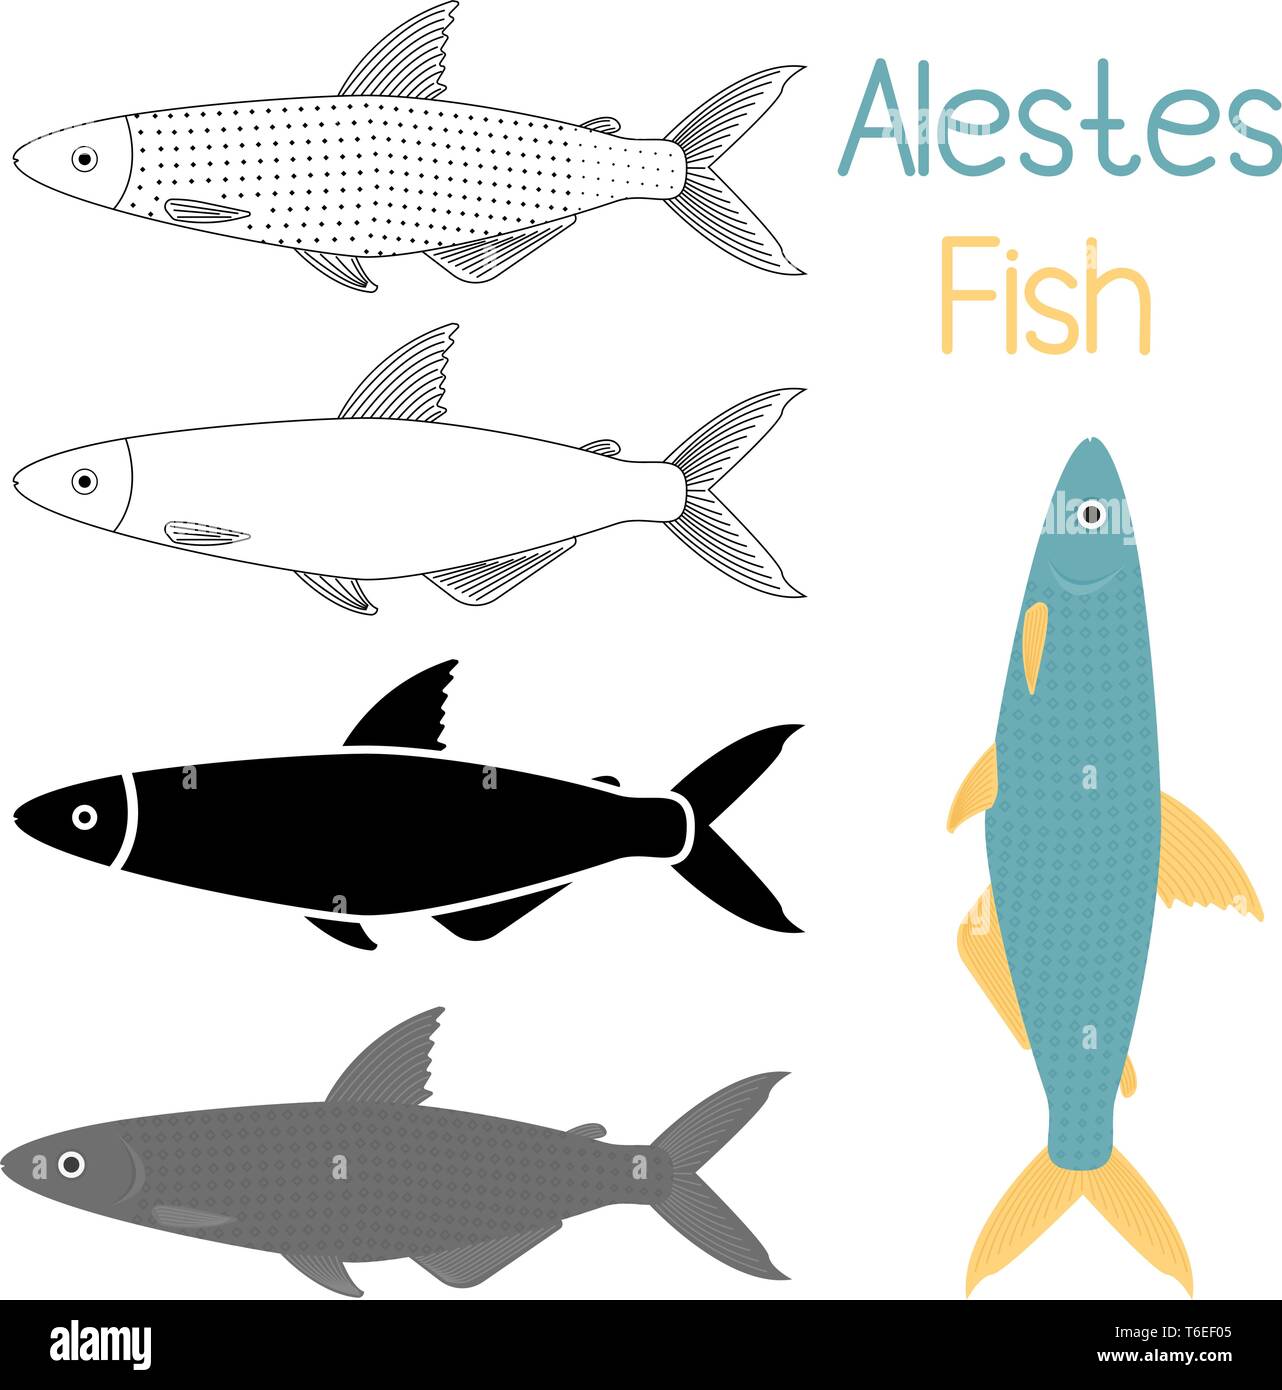 Fisch Icon Set, Alestes liebrecht ii oder Alestes ansorgii Vector Illustration Stock Vektor